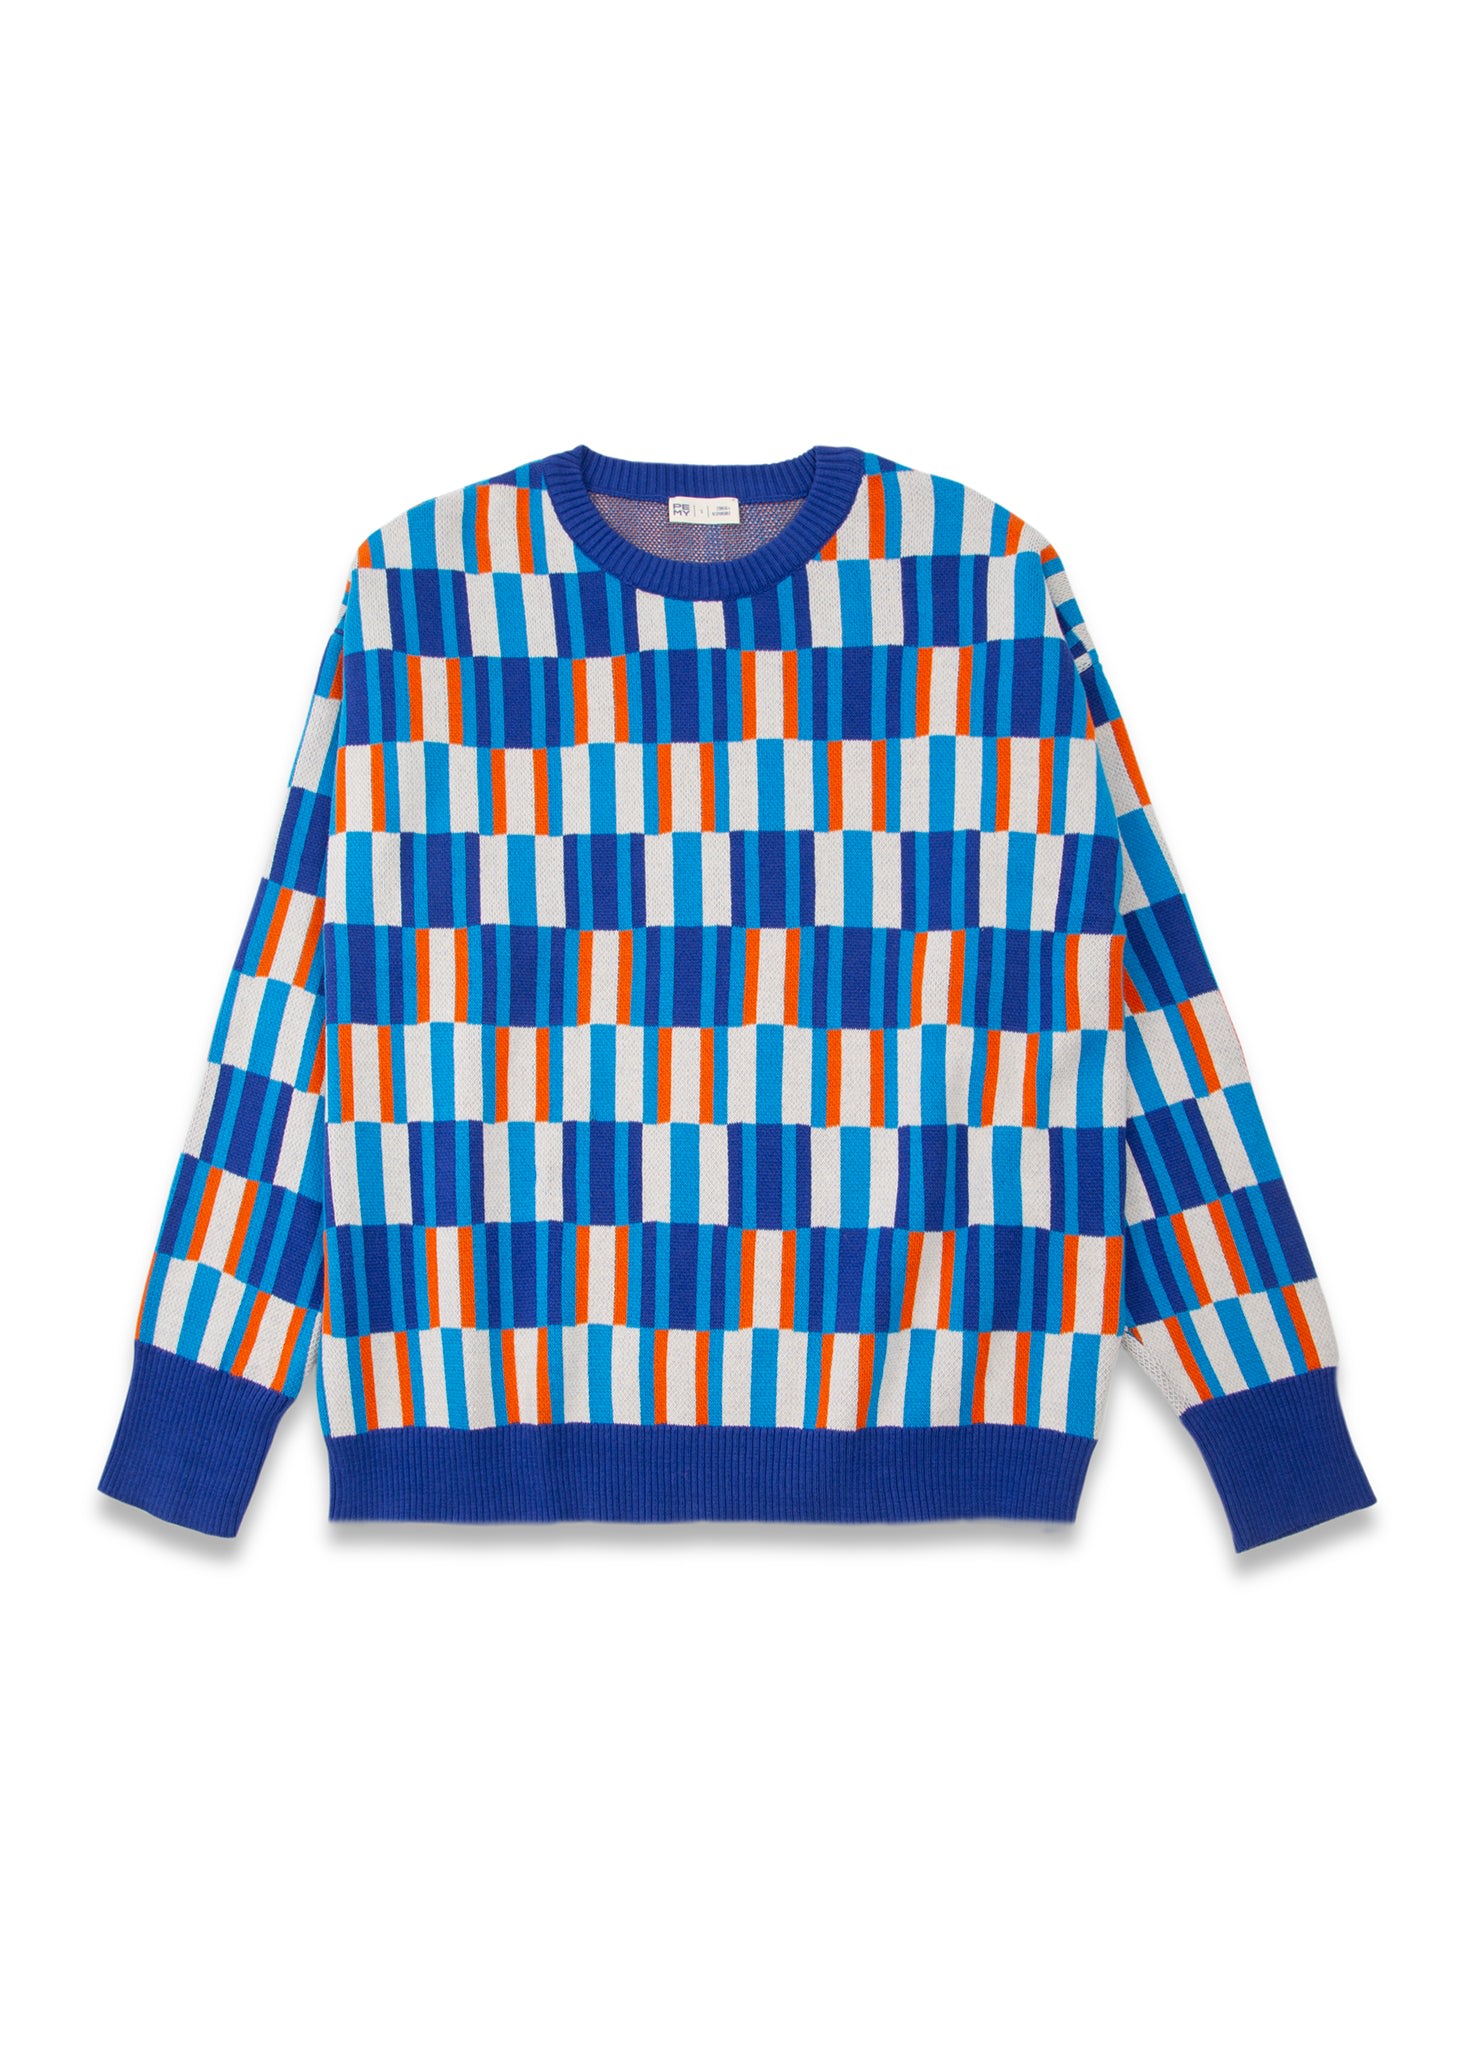 Women’s Yellow / Orange / Blue Pieces Oversize Jacquard Cotton Knit Sweater Extra Small Pemy